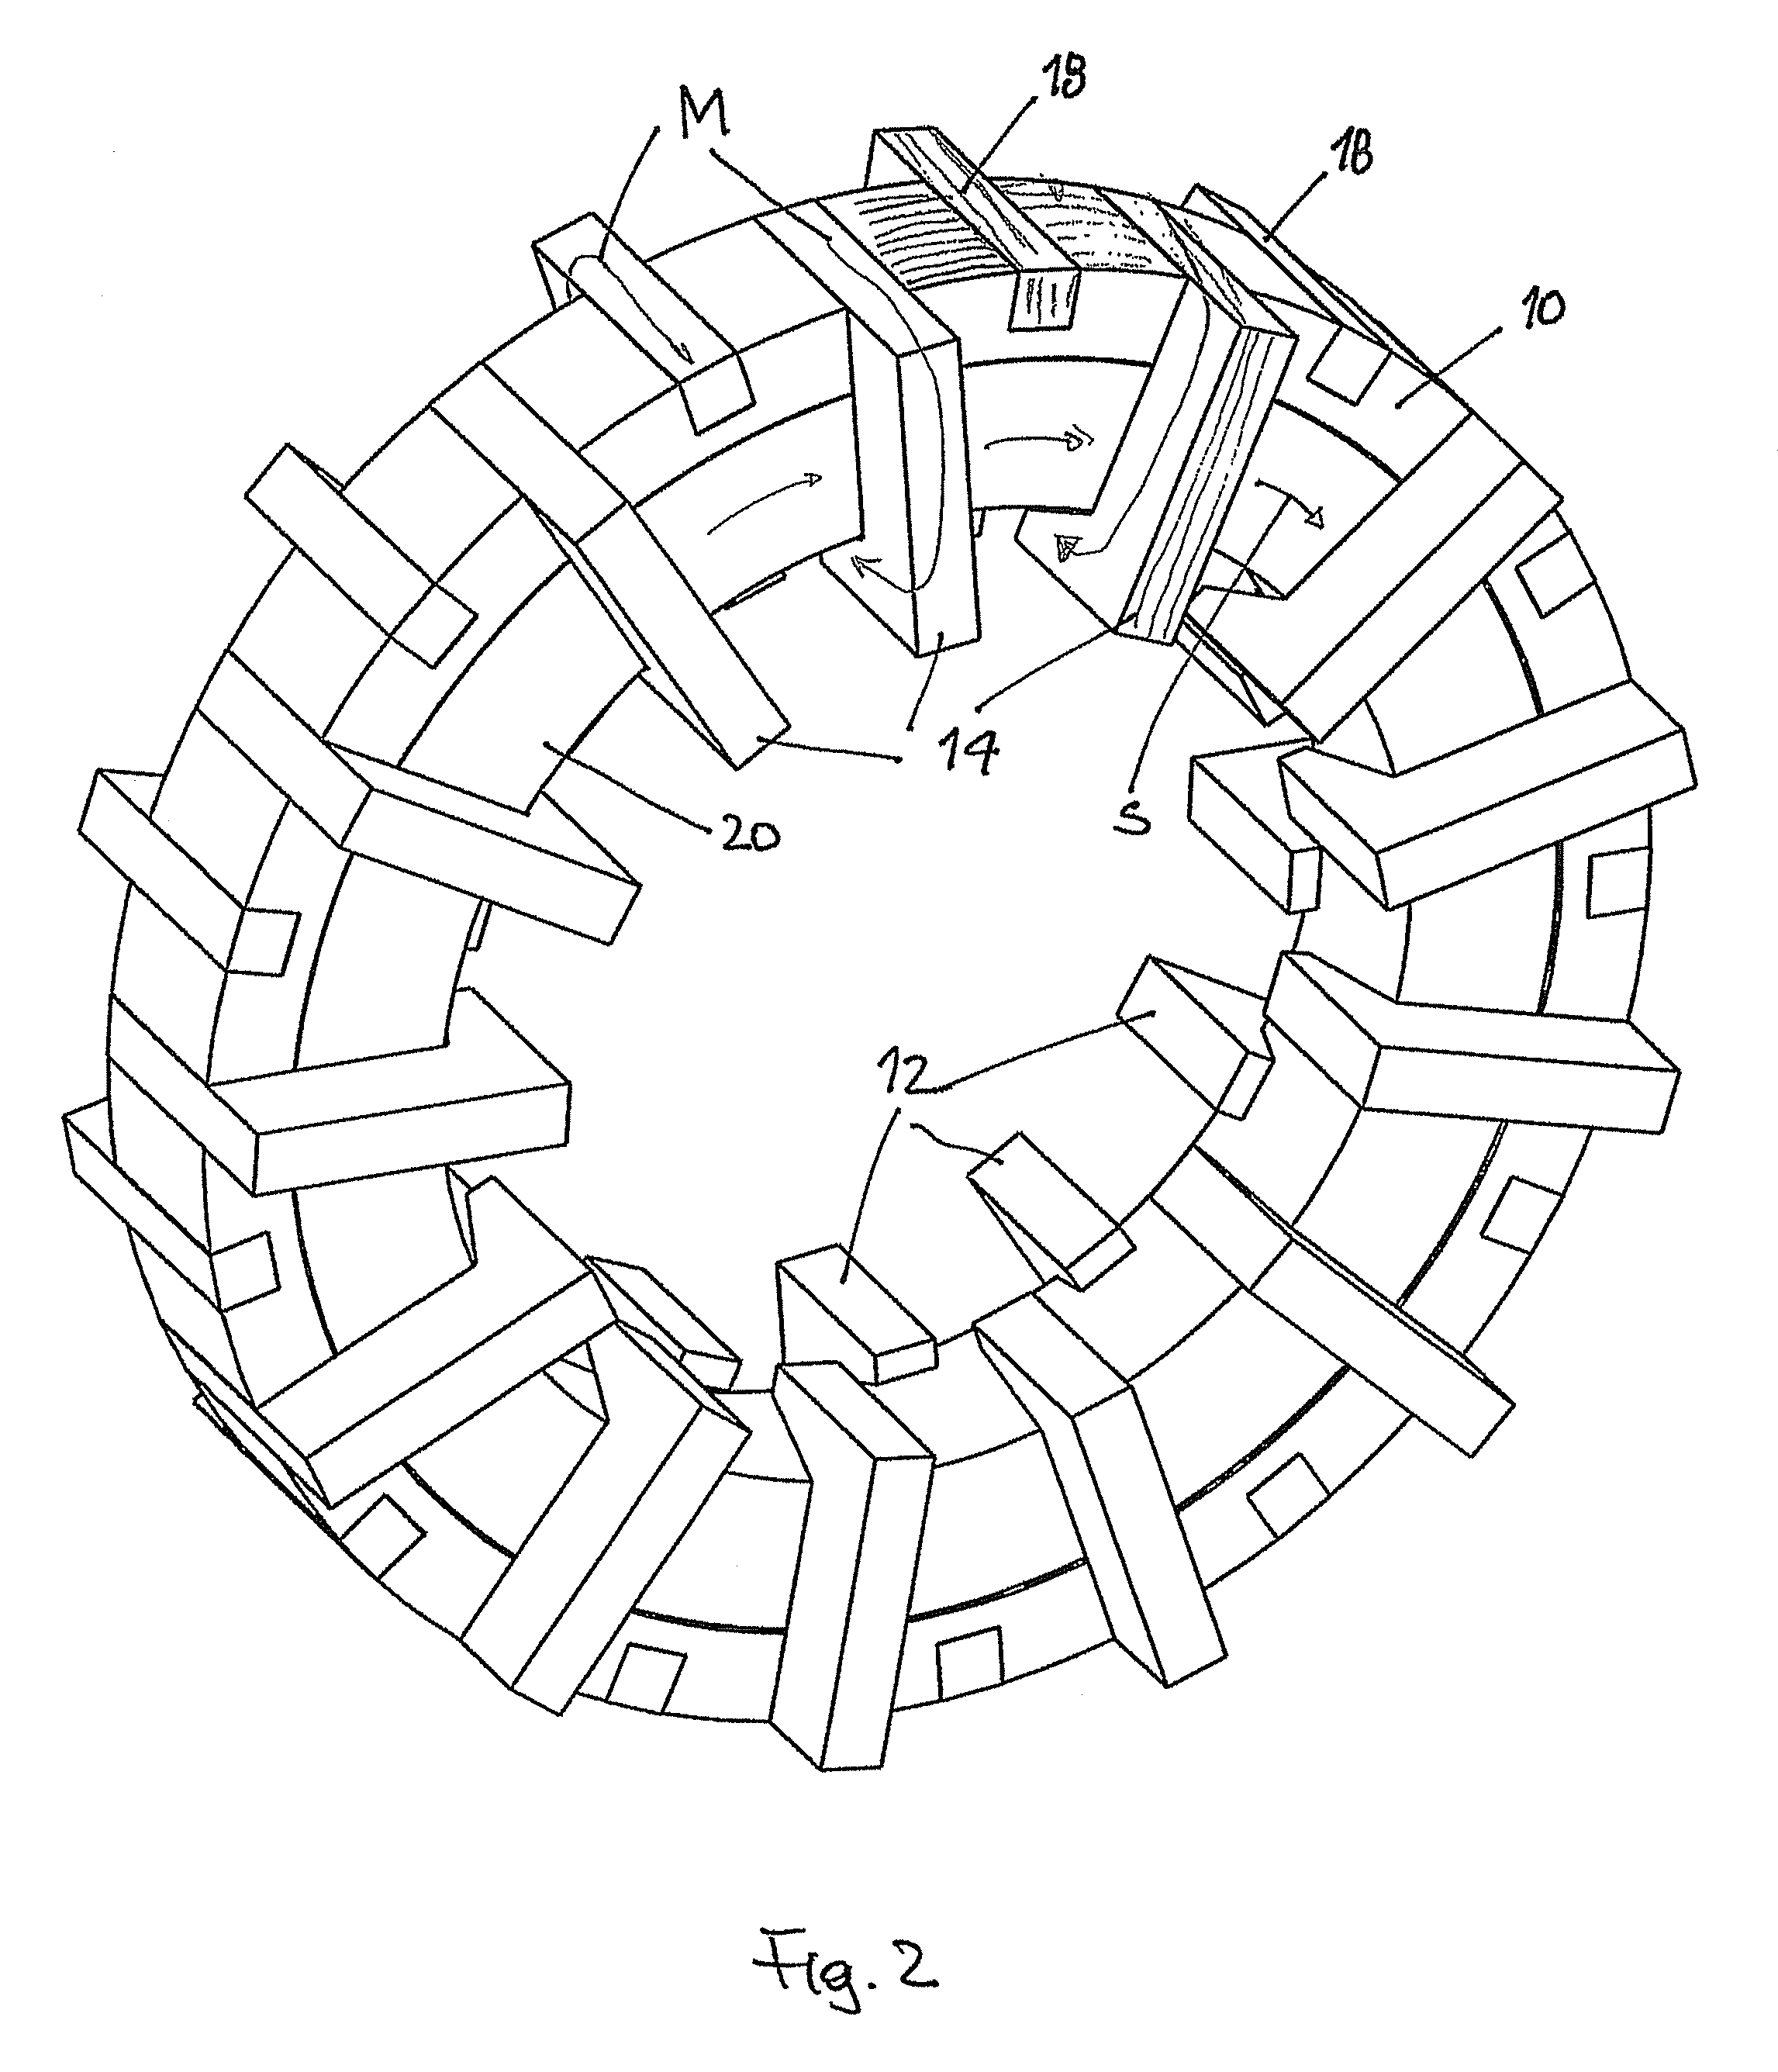 Stator arrangement and rotor arrangement for a transverse flux machine